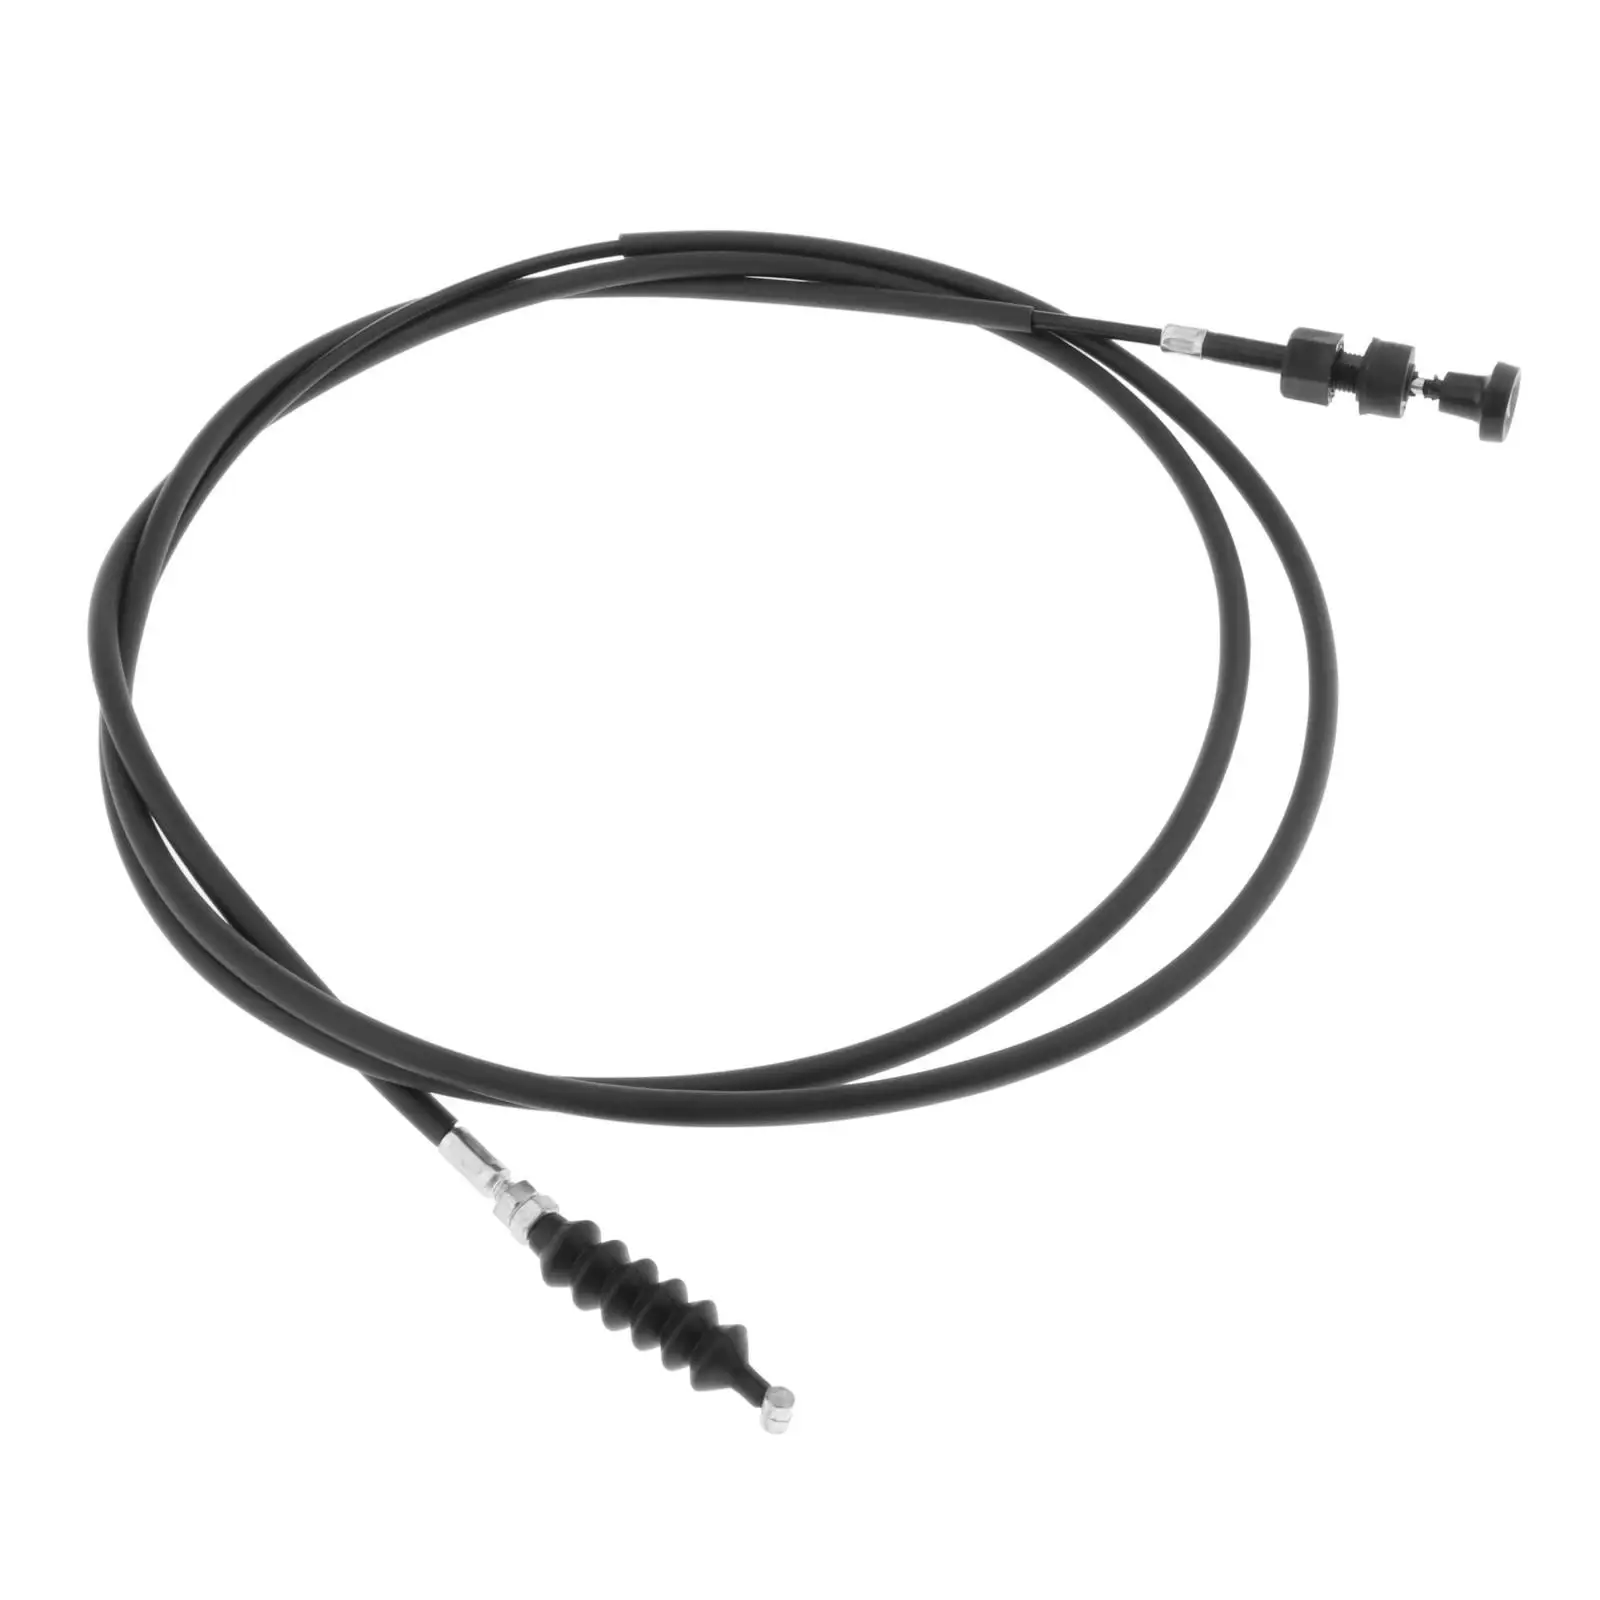 Choke 54017-1208 Starter Cable Fit for Kawasaki 3010 3020 Mule